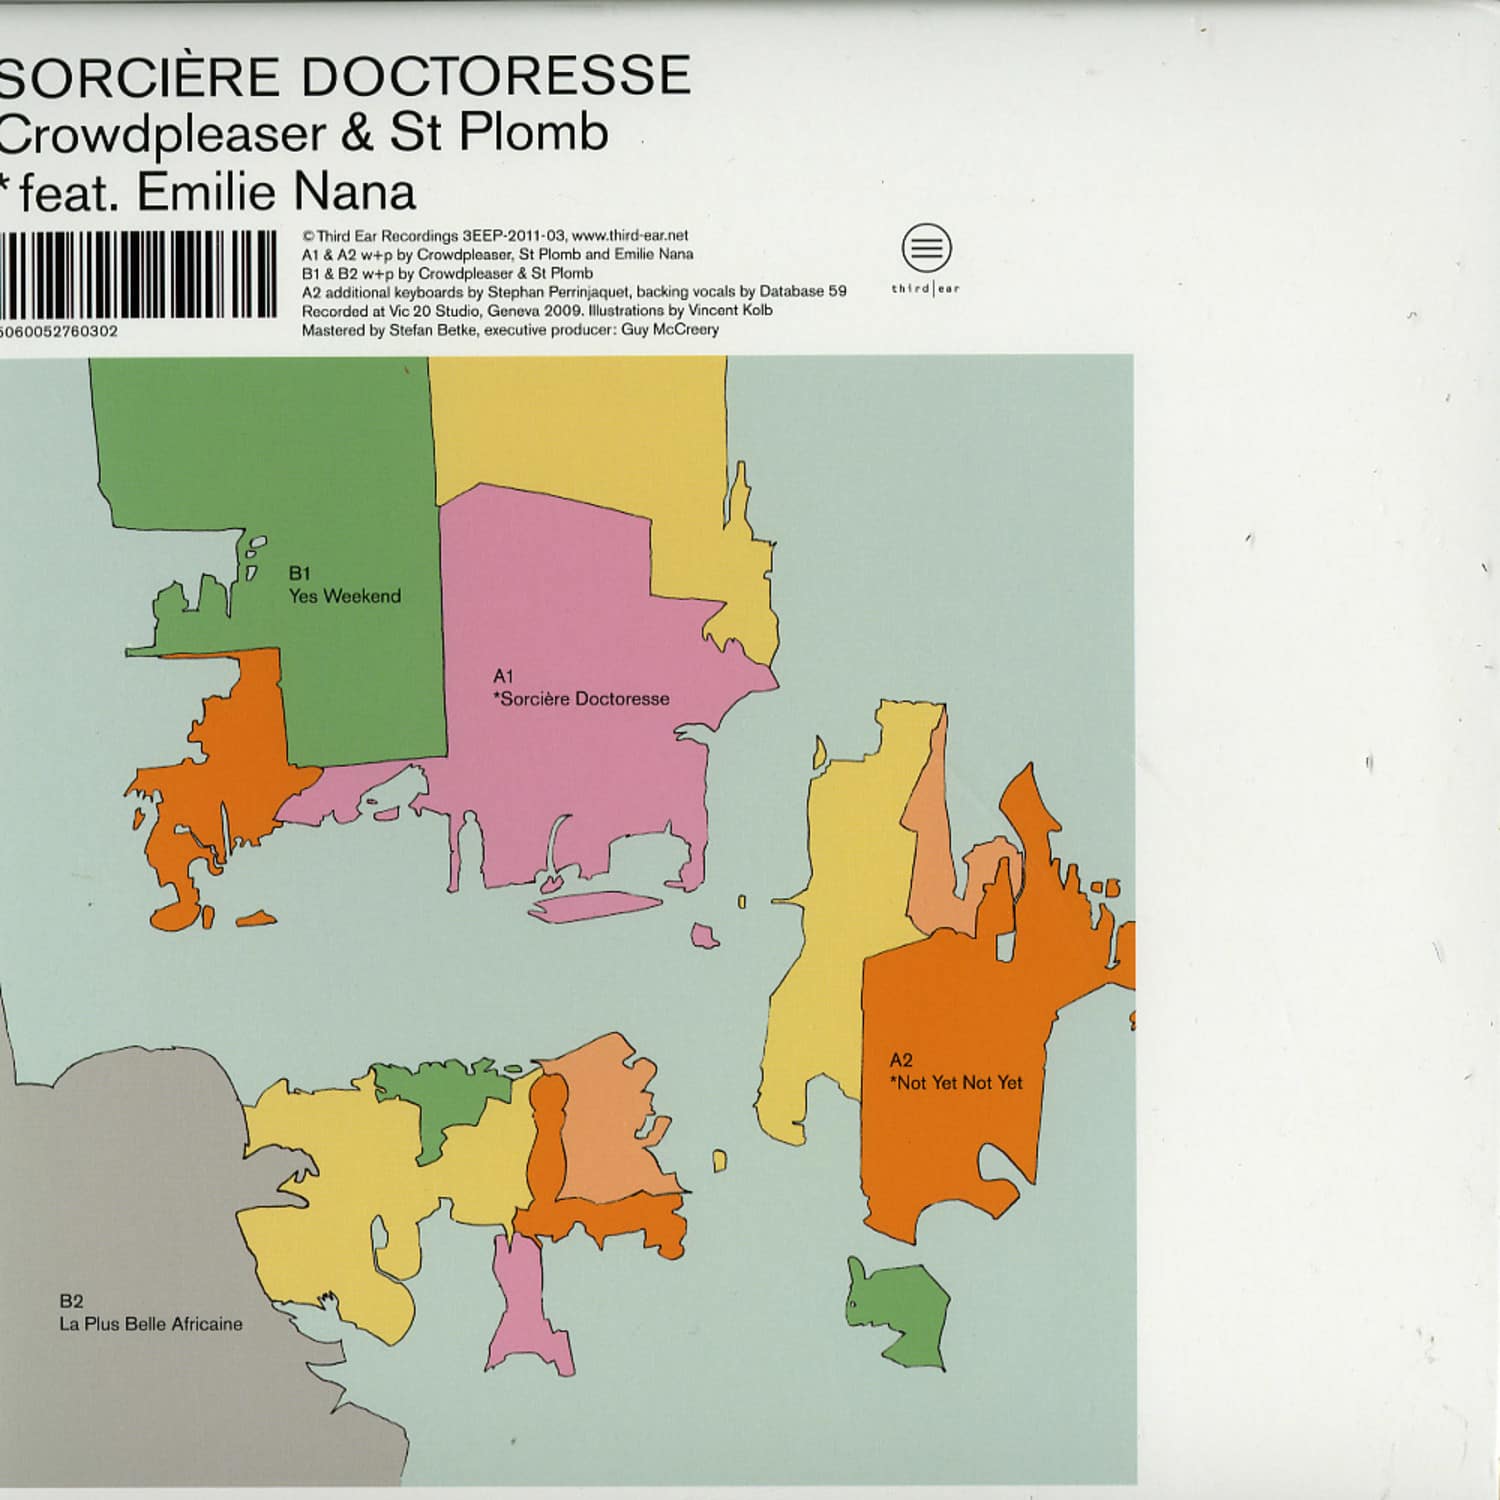 Crowdpleaser & St. Plomb - LA SORCIERE DOCTORESSE EP